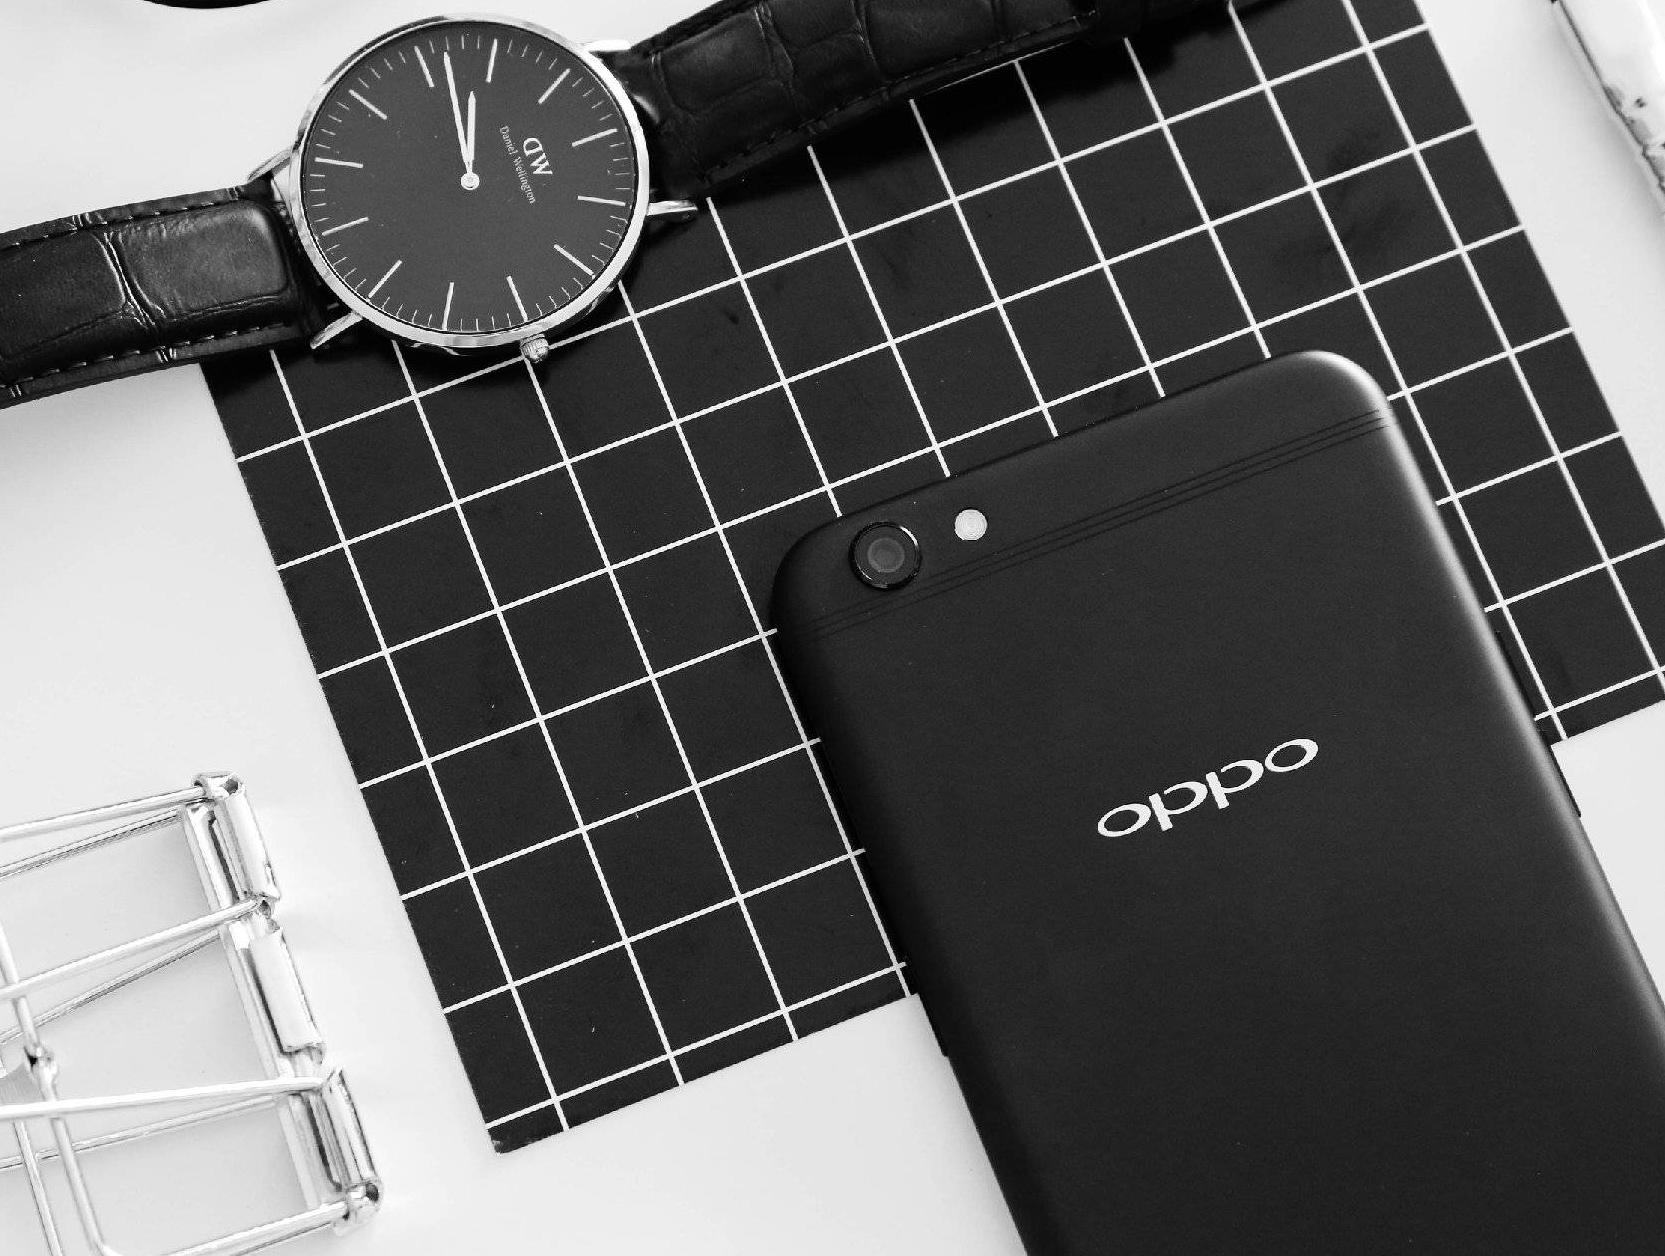 Oppo R9S Plus - Brand New